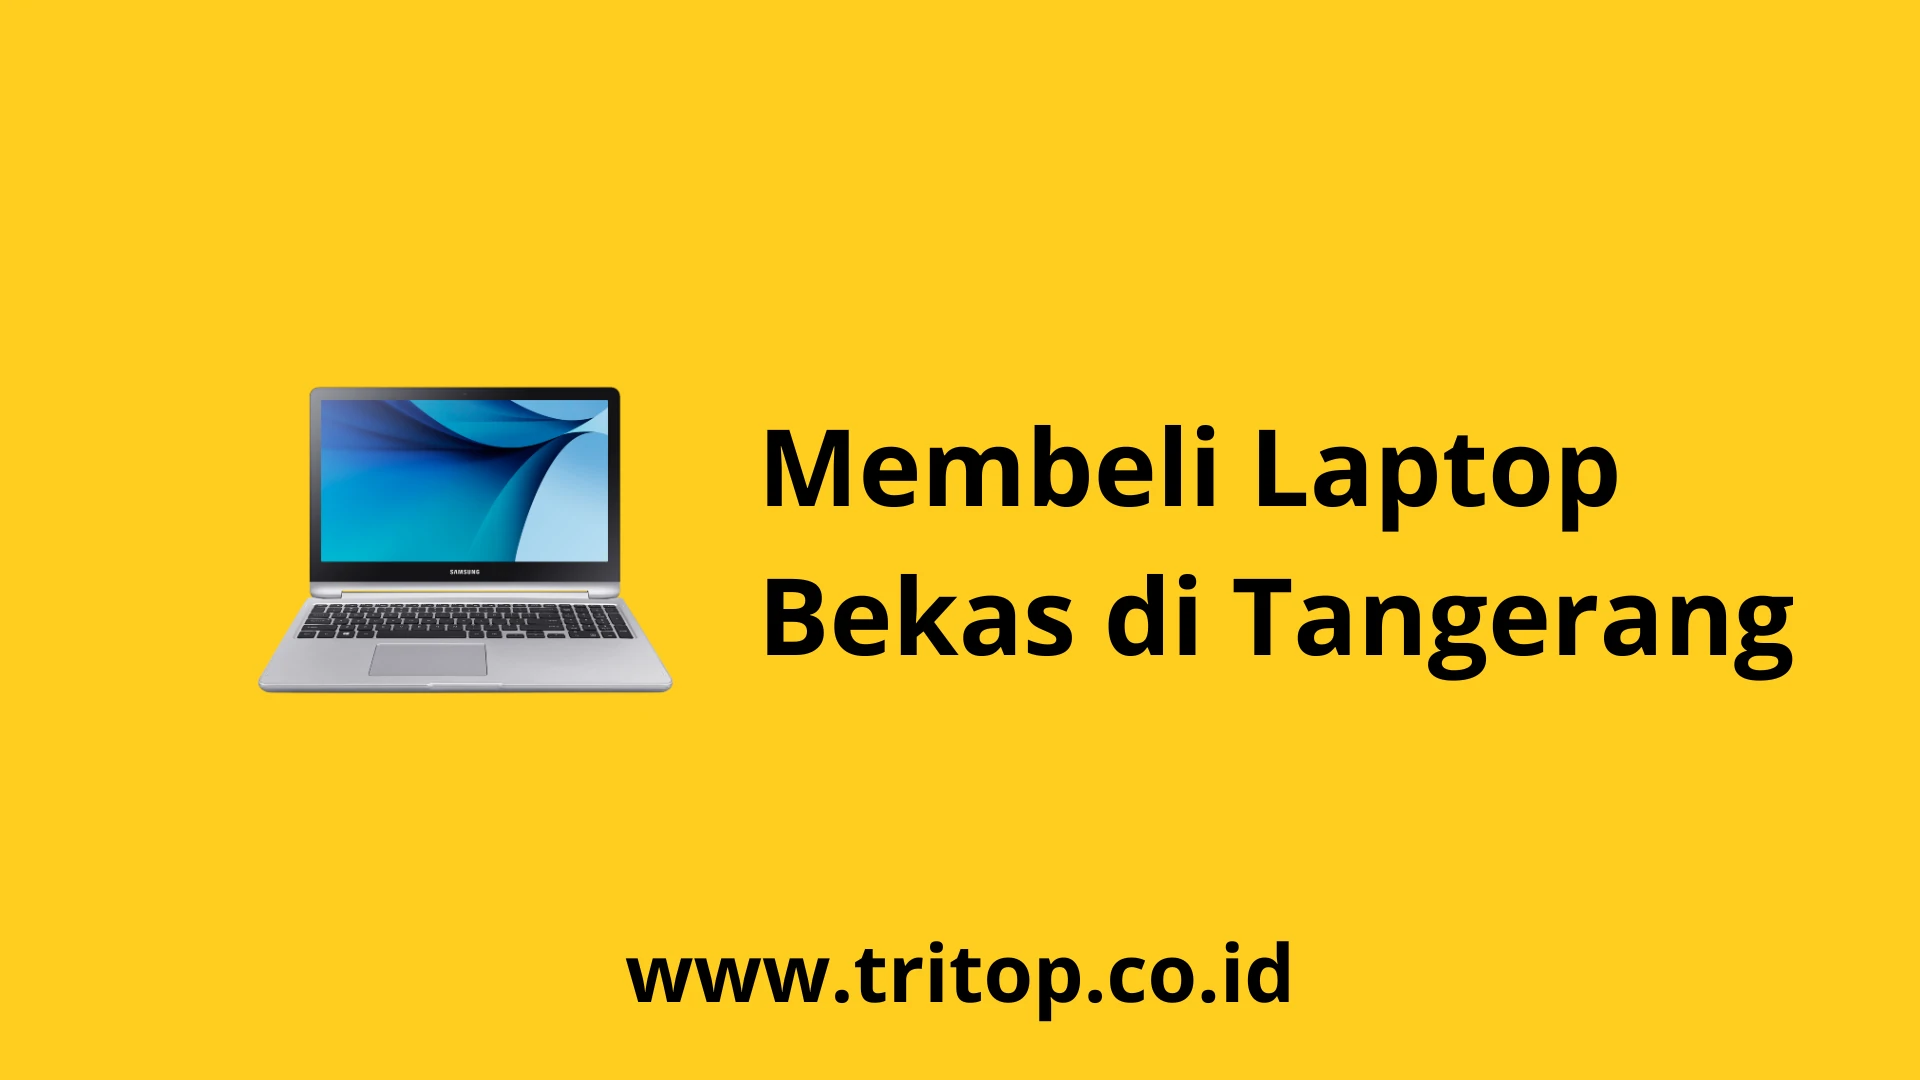 Laptop Bekas Tangerang Tritop.co.id